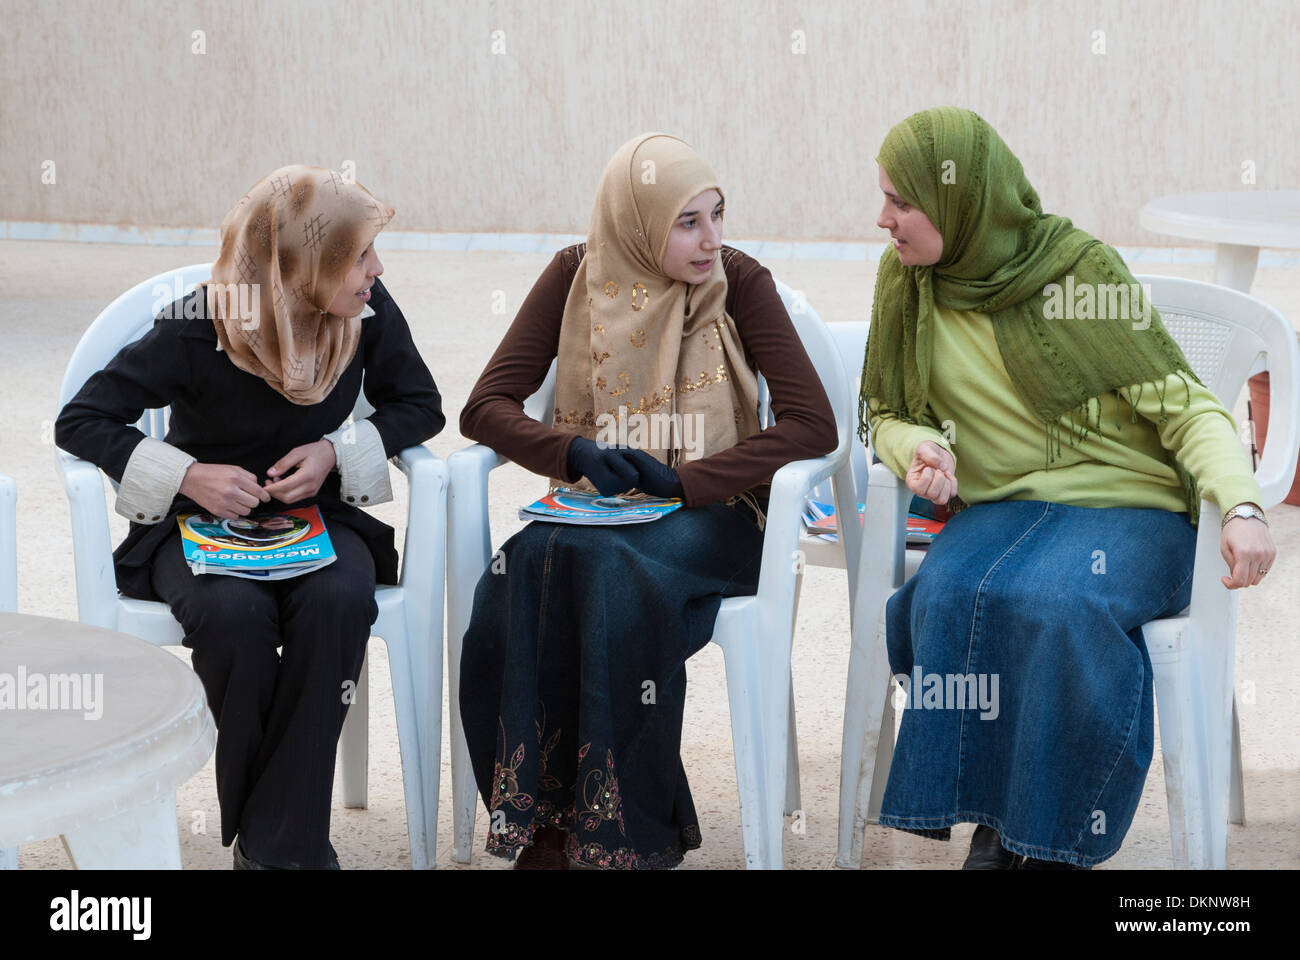 Libya, Benghazi. Three Teenage Libyan Girls Attending a School for English Language Studies. Stock Photo